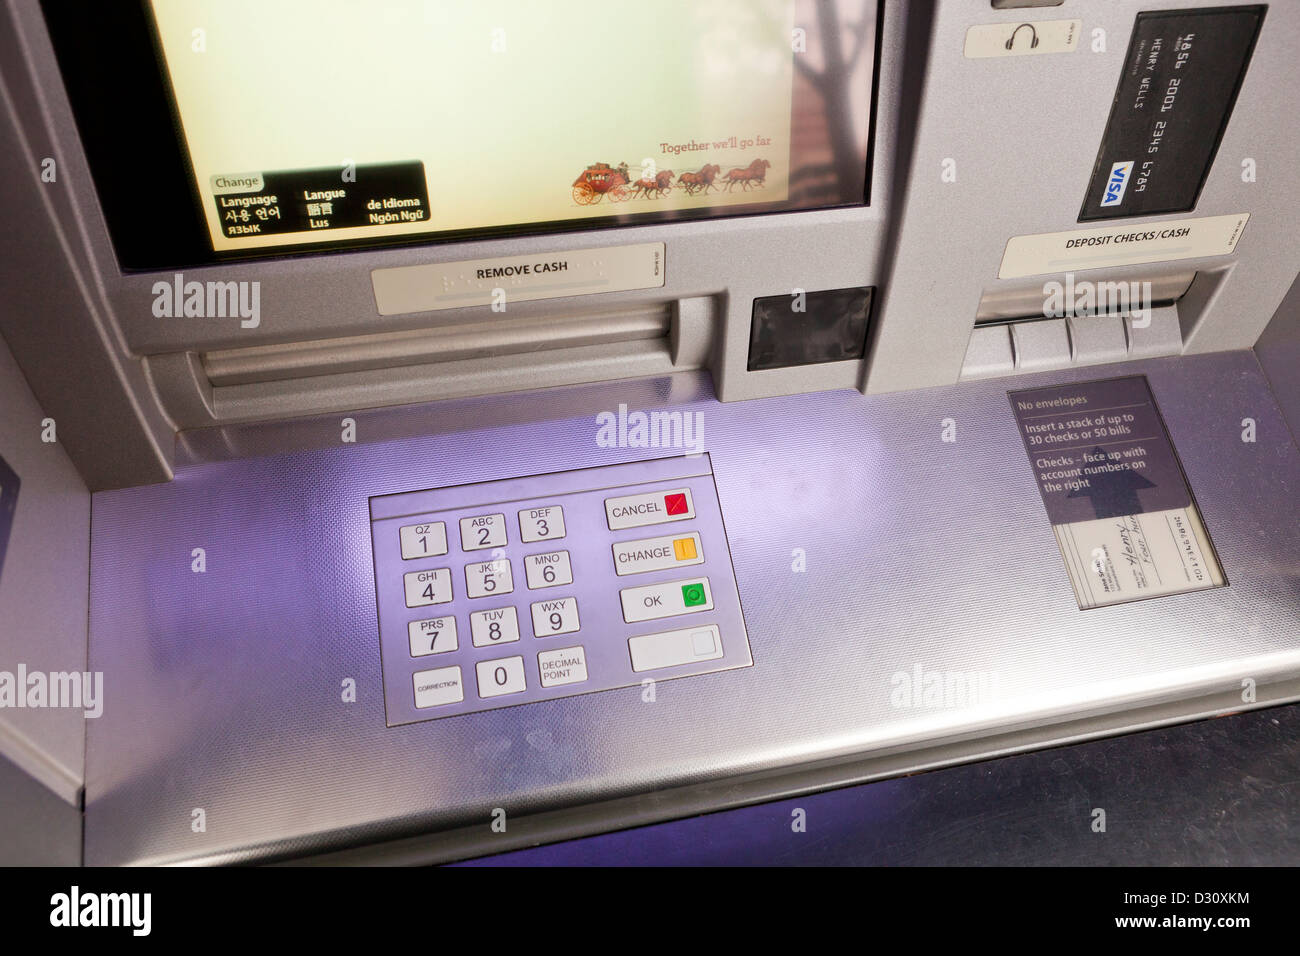 Bank ATM keypad Stock Photo